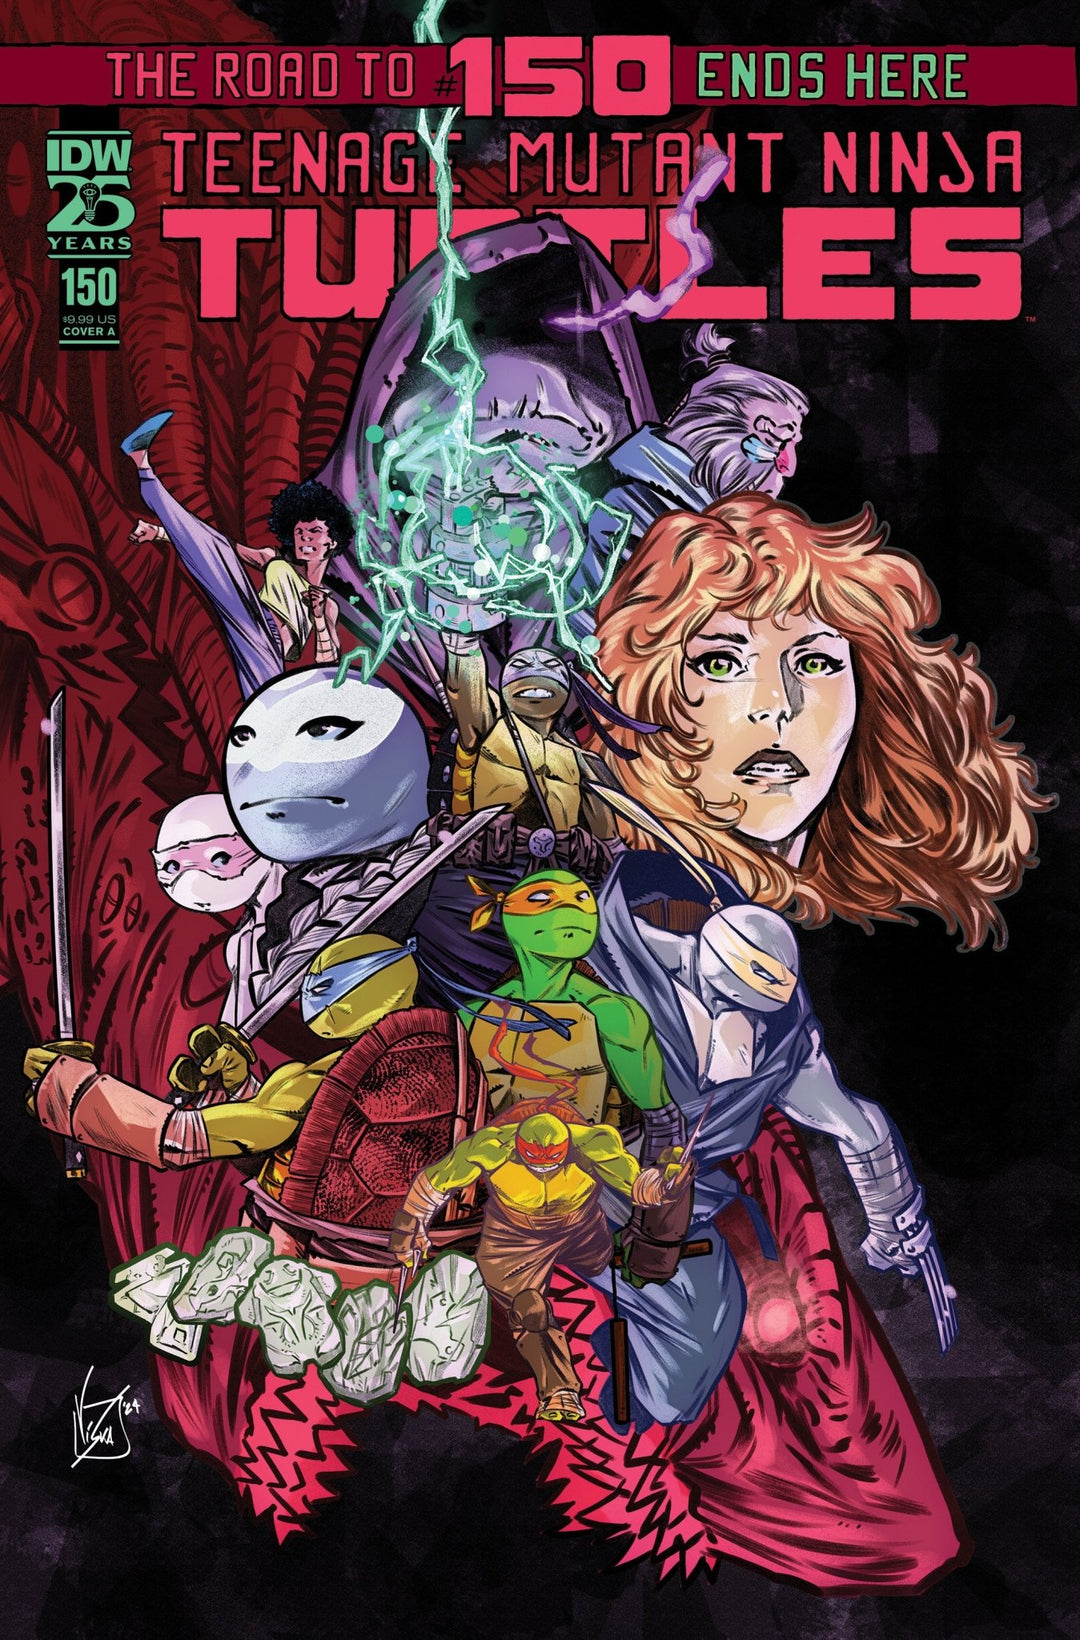 Teenage Mutant Ninja Turtles #150 Cover A (Federici) - gabescaveccc